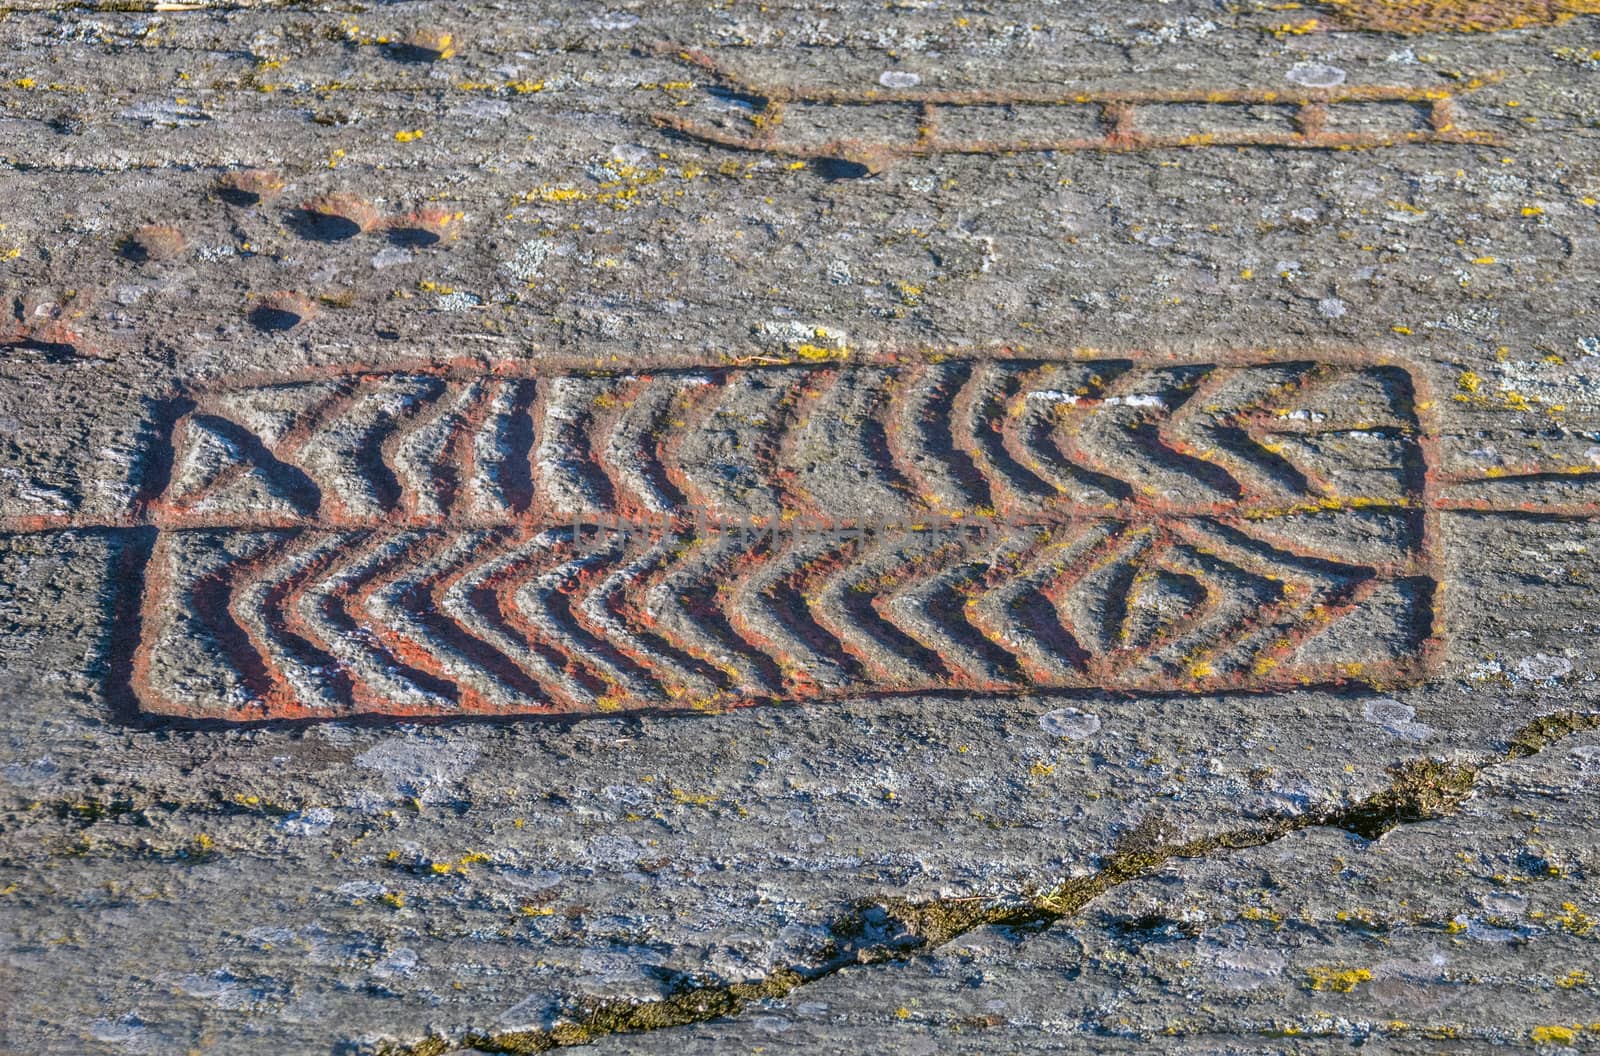 Swedish Petroglyphs dating back about 3000 years